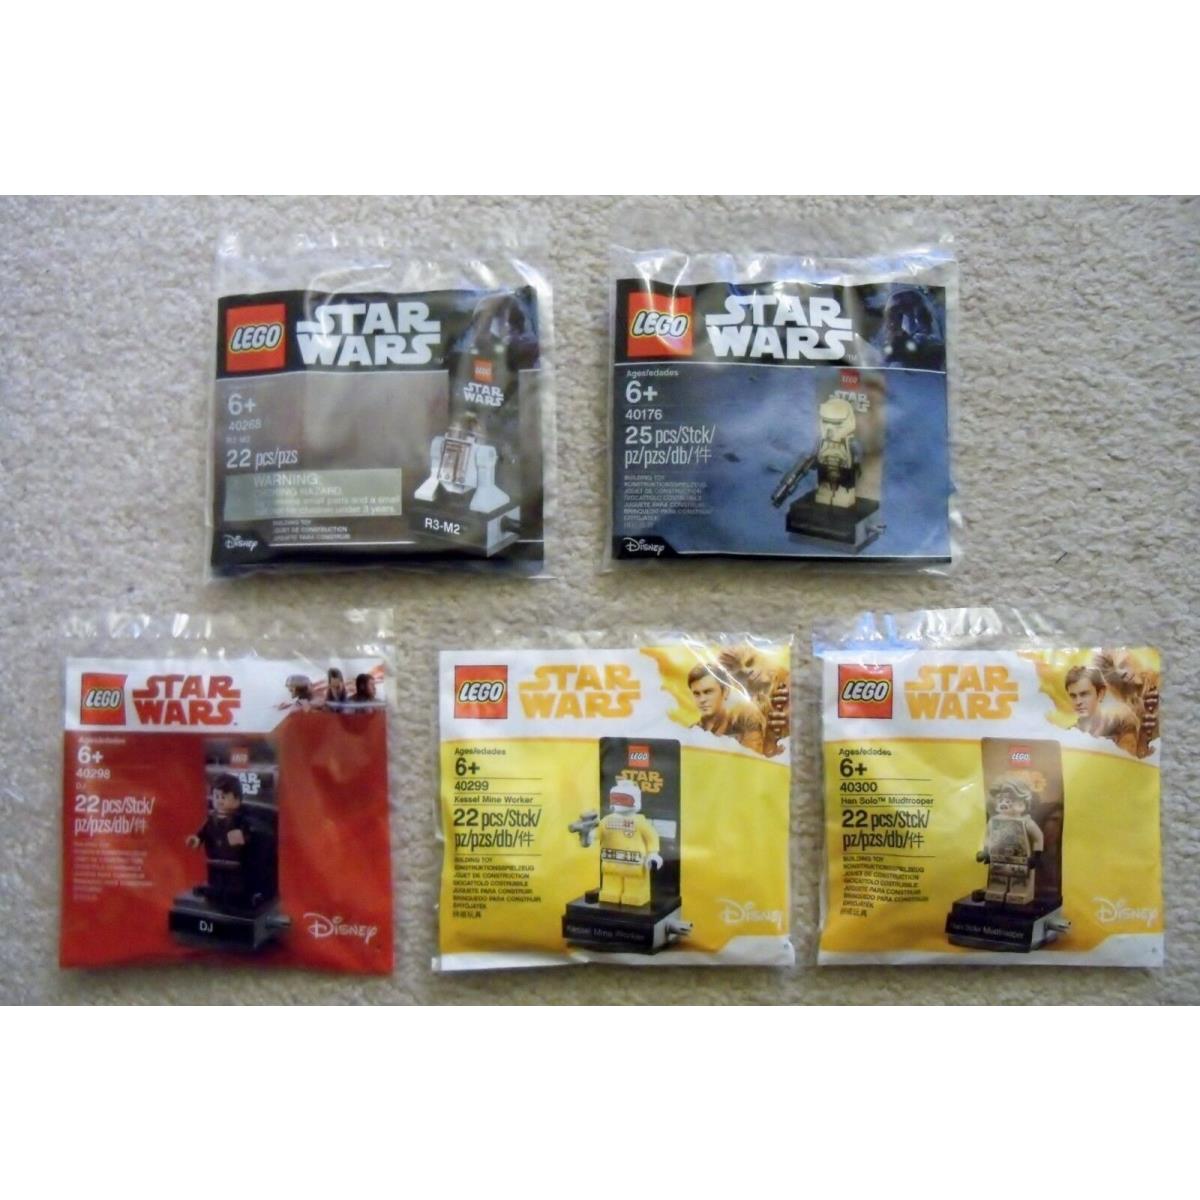 Lego Star Wars - Rare - Set Of 5 - 40176 40268 40298 40299 40300 Han Solo